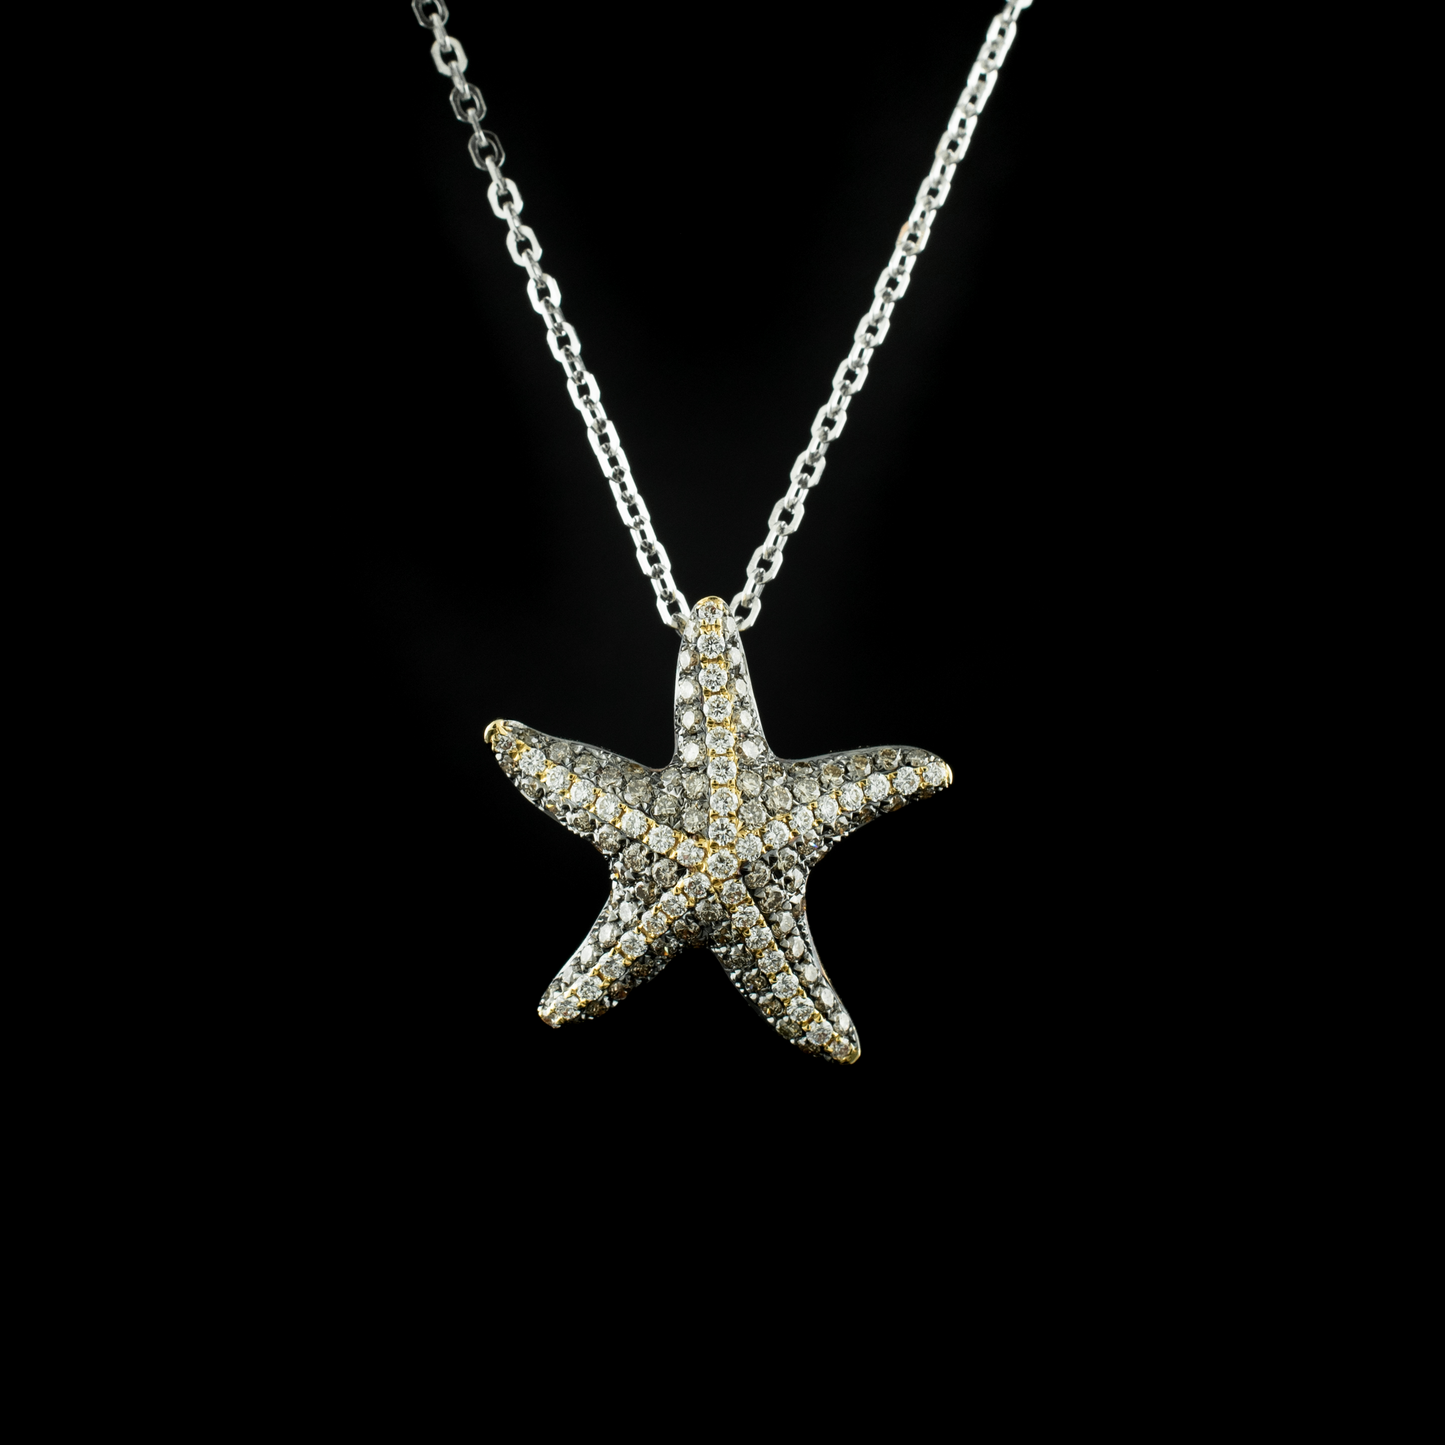 The Diamond Starfish Pendant